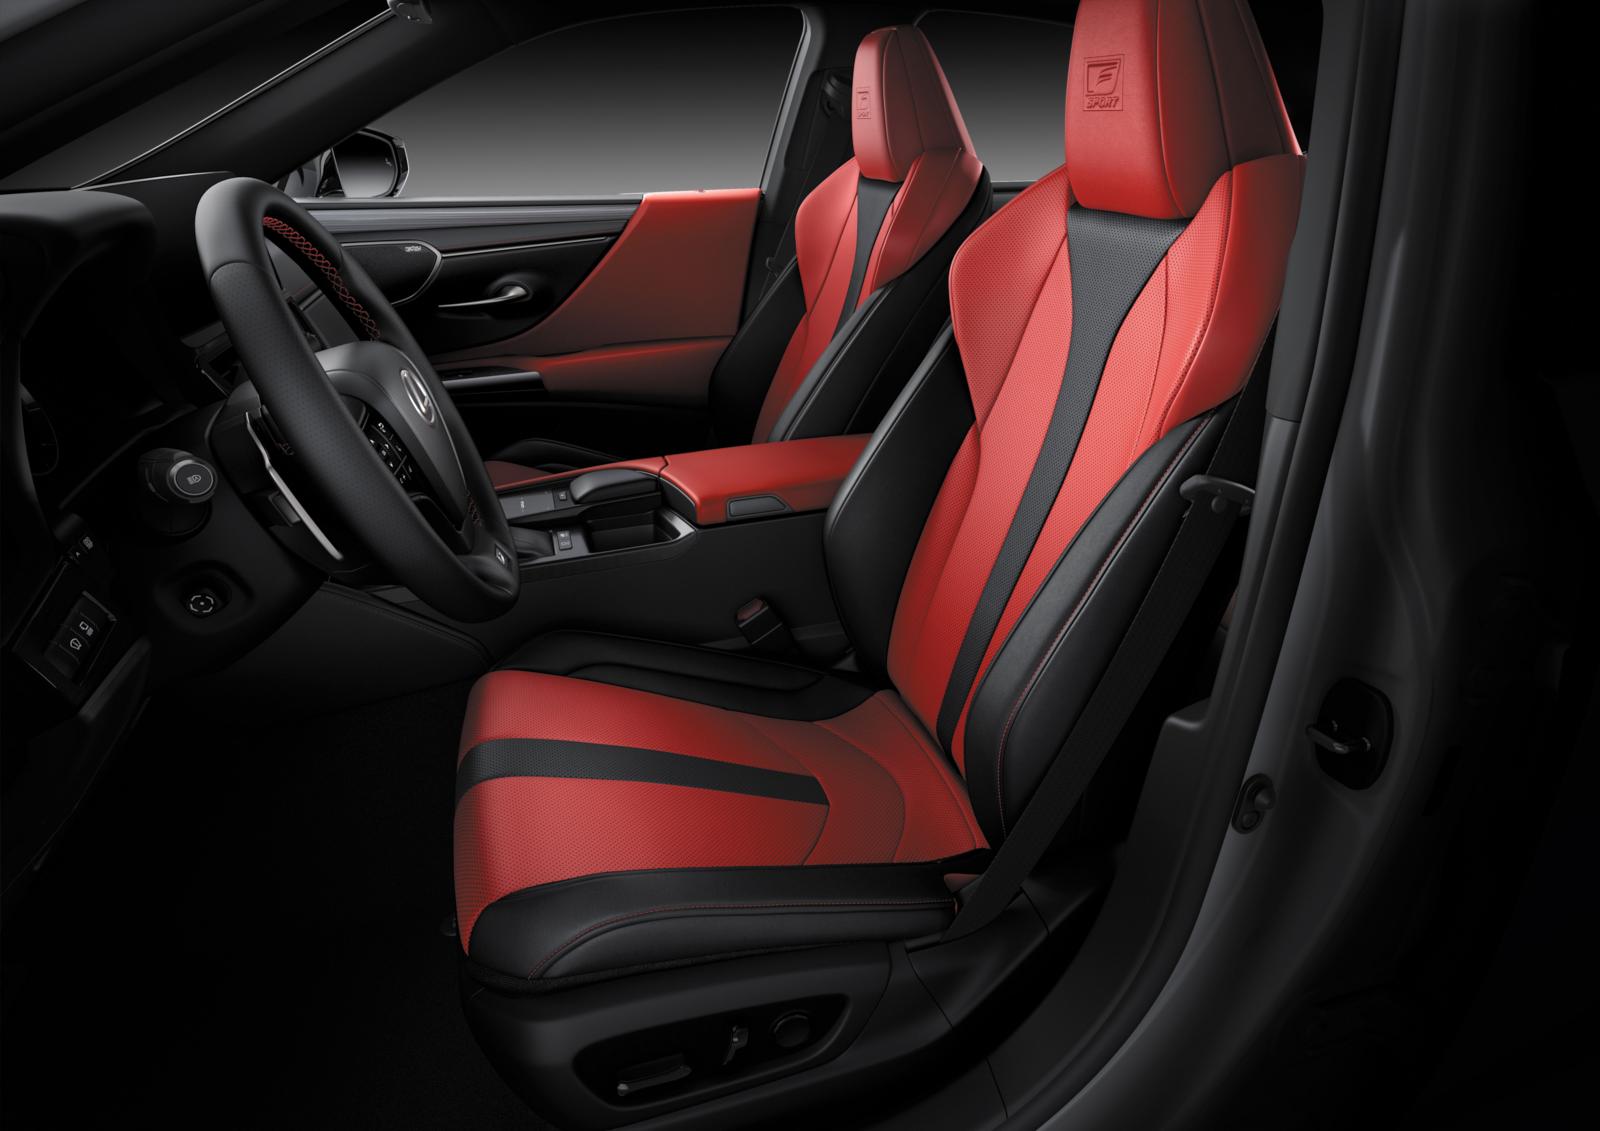 Thiết kế ghế ngồi thể thao trên Lexus ES 250 F Sport.